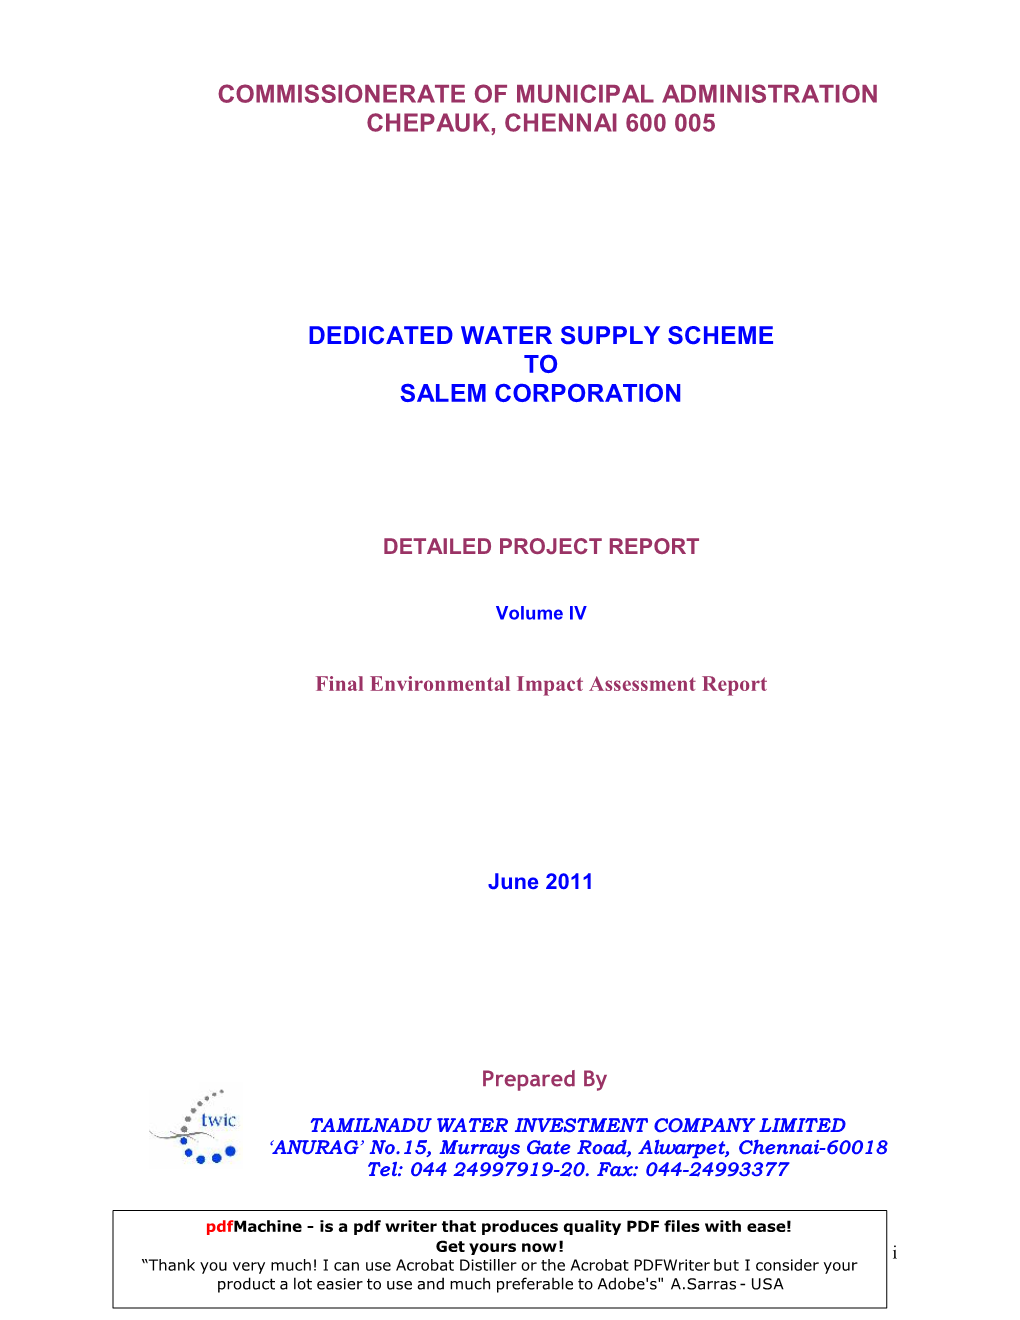 Dedicated Water Supply Scheme to Salem Corporation